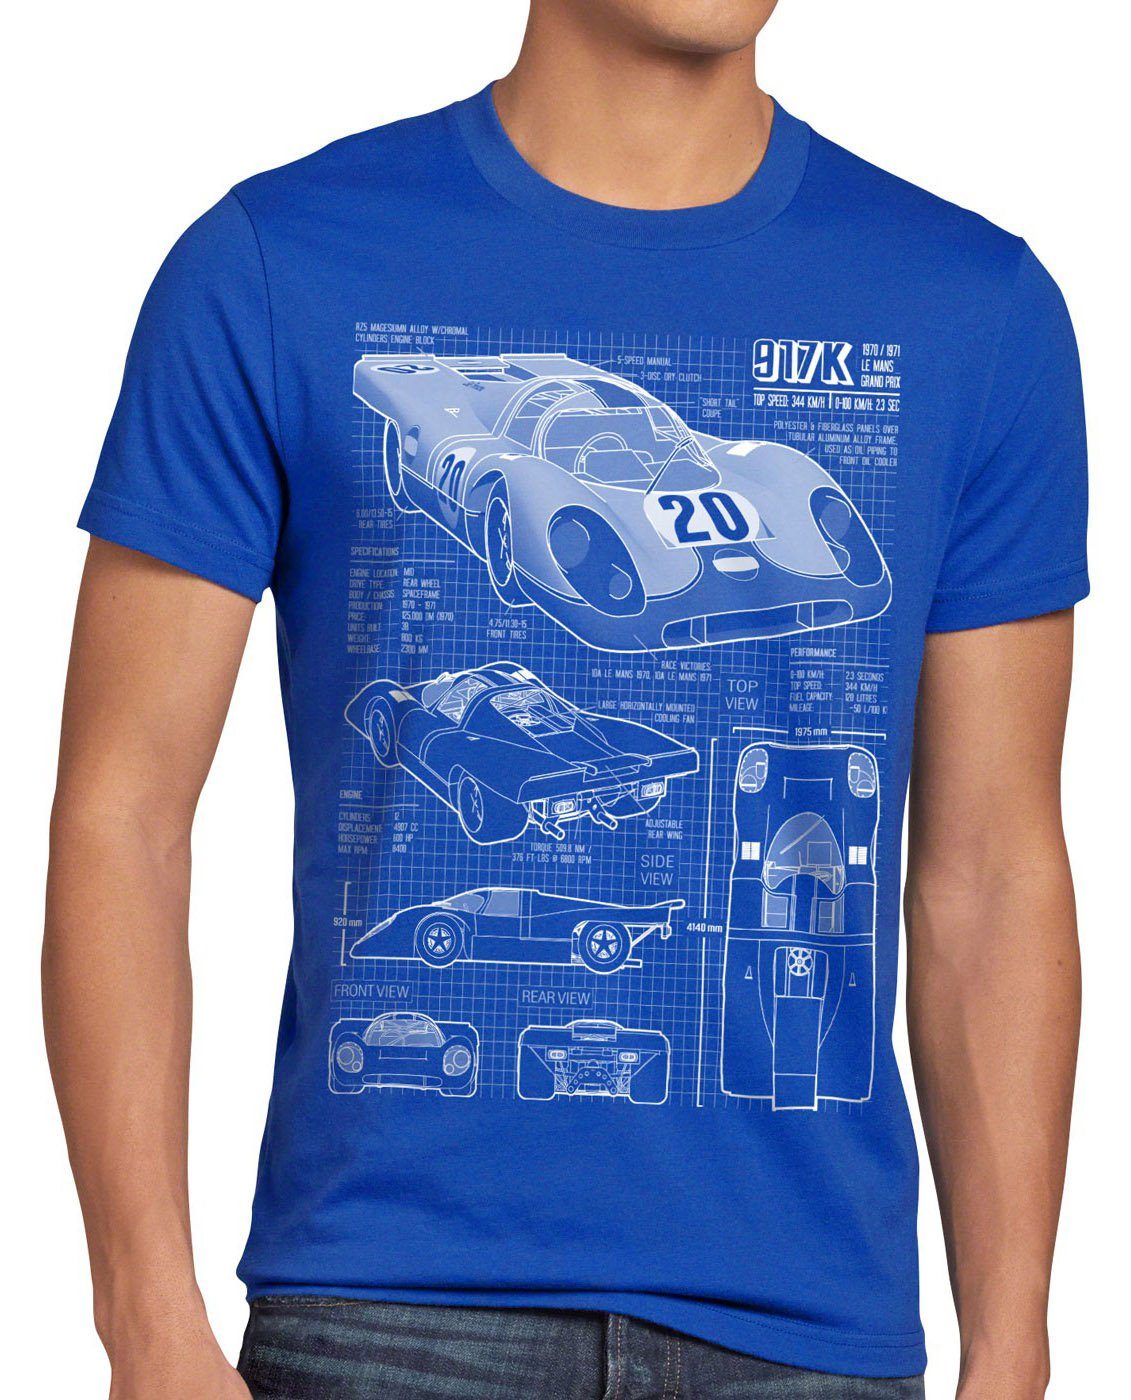 style3 Print-Shirt Herren T-Shirt 917K Le Mans 24stunden rennen 997 996 gt2 918 914 916 924 mcqueen blau